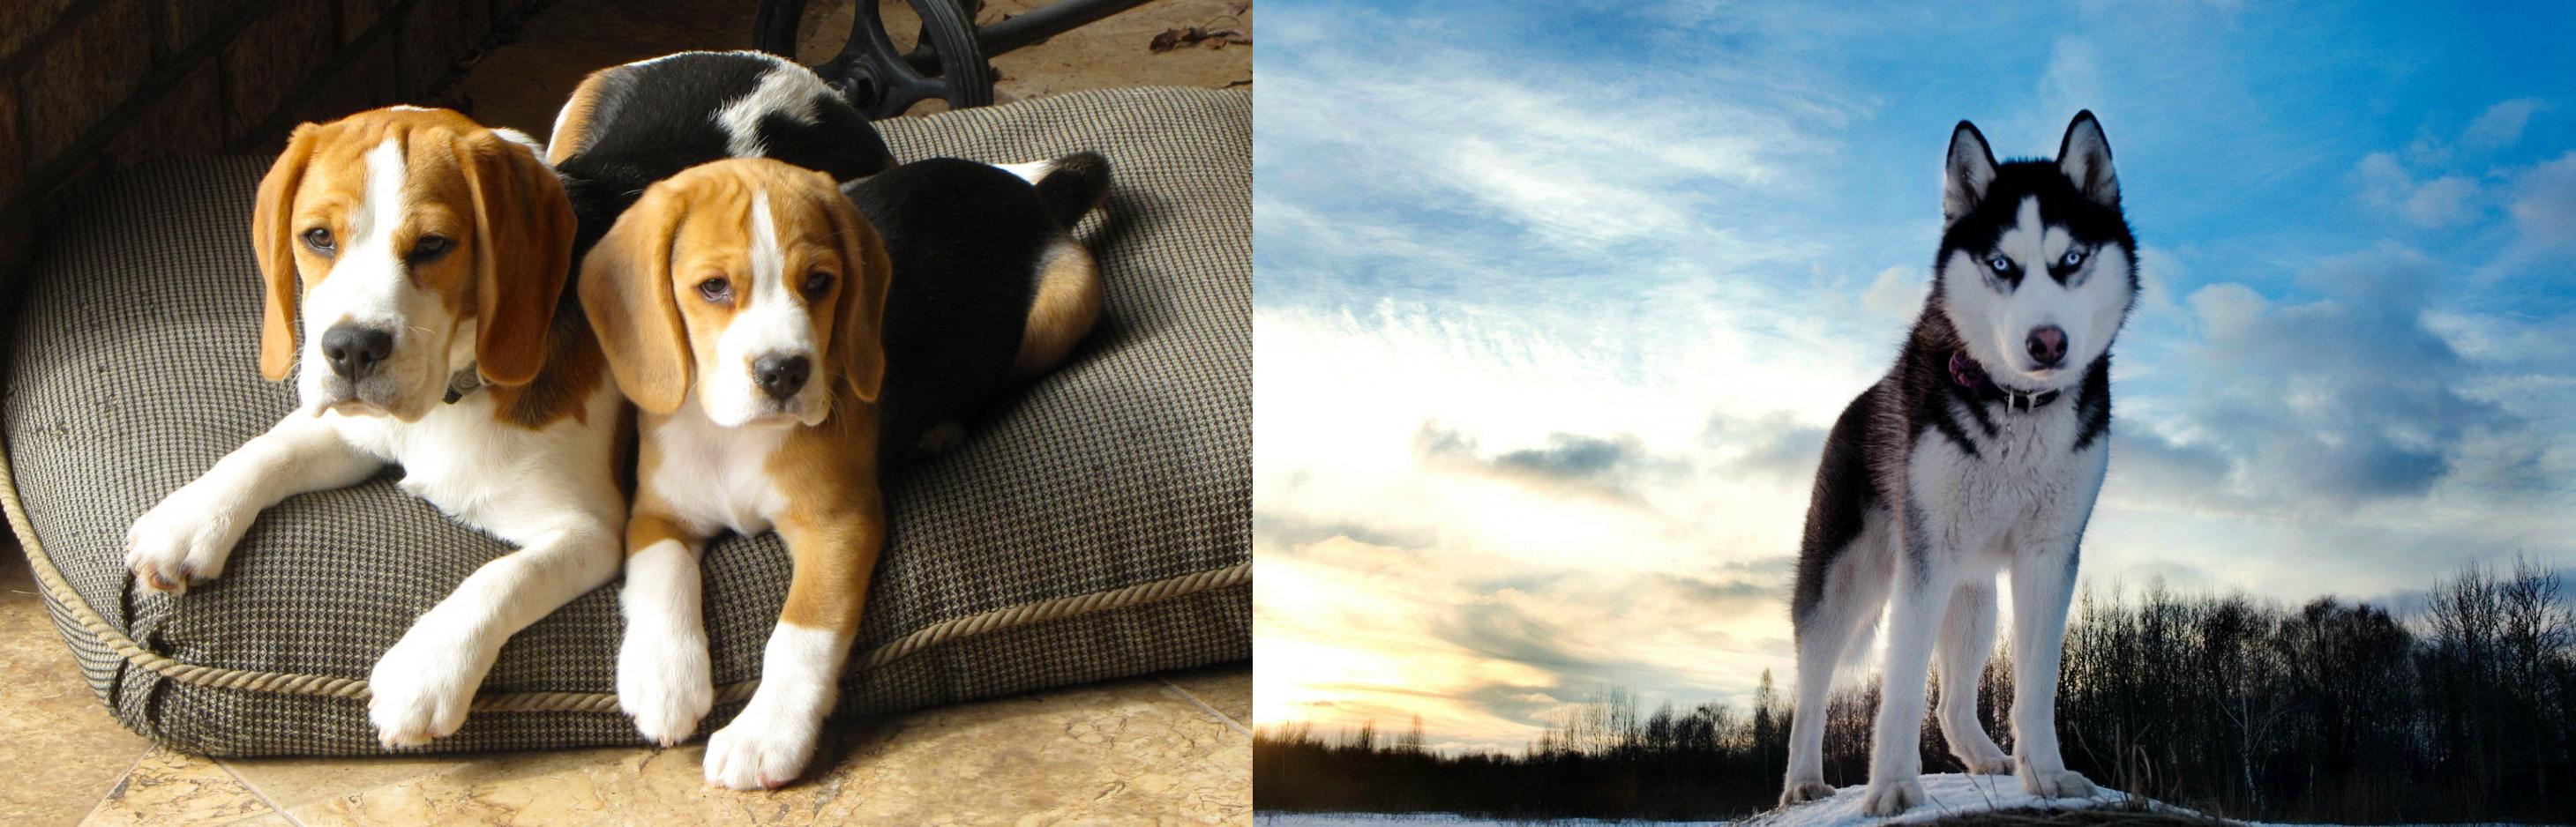 Beagle is originated from United Kingdom but Alaskan Husky is originated fr...